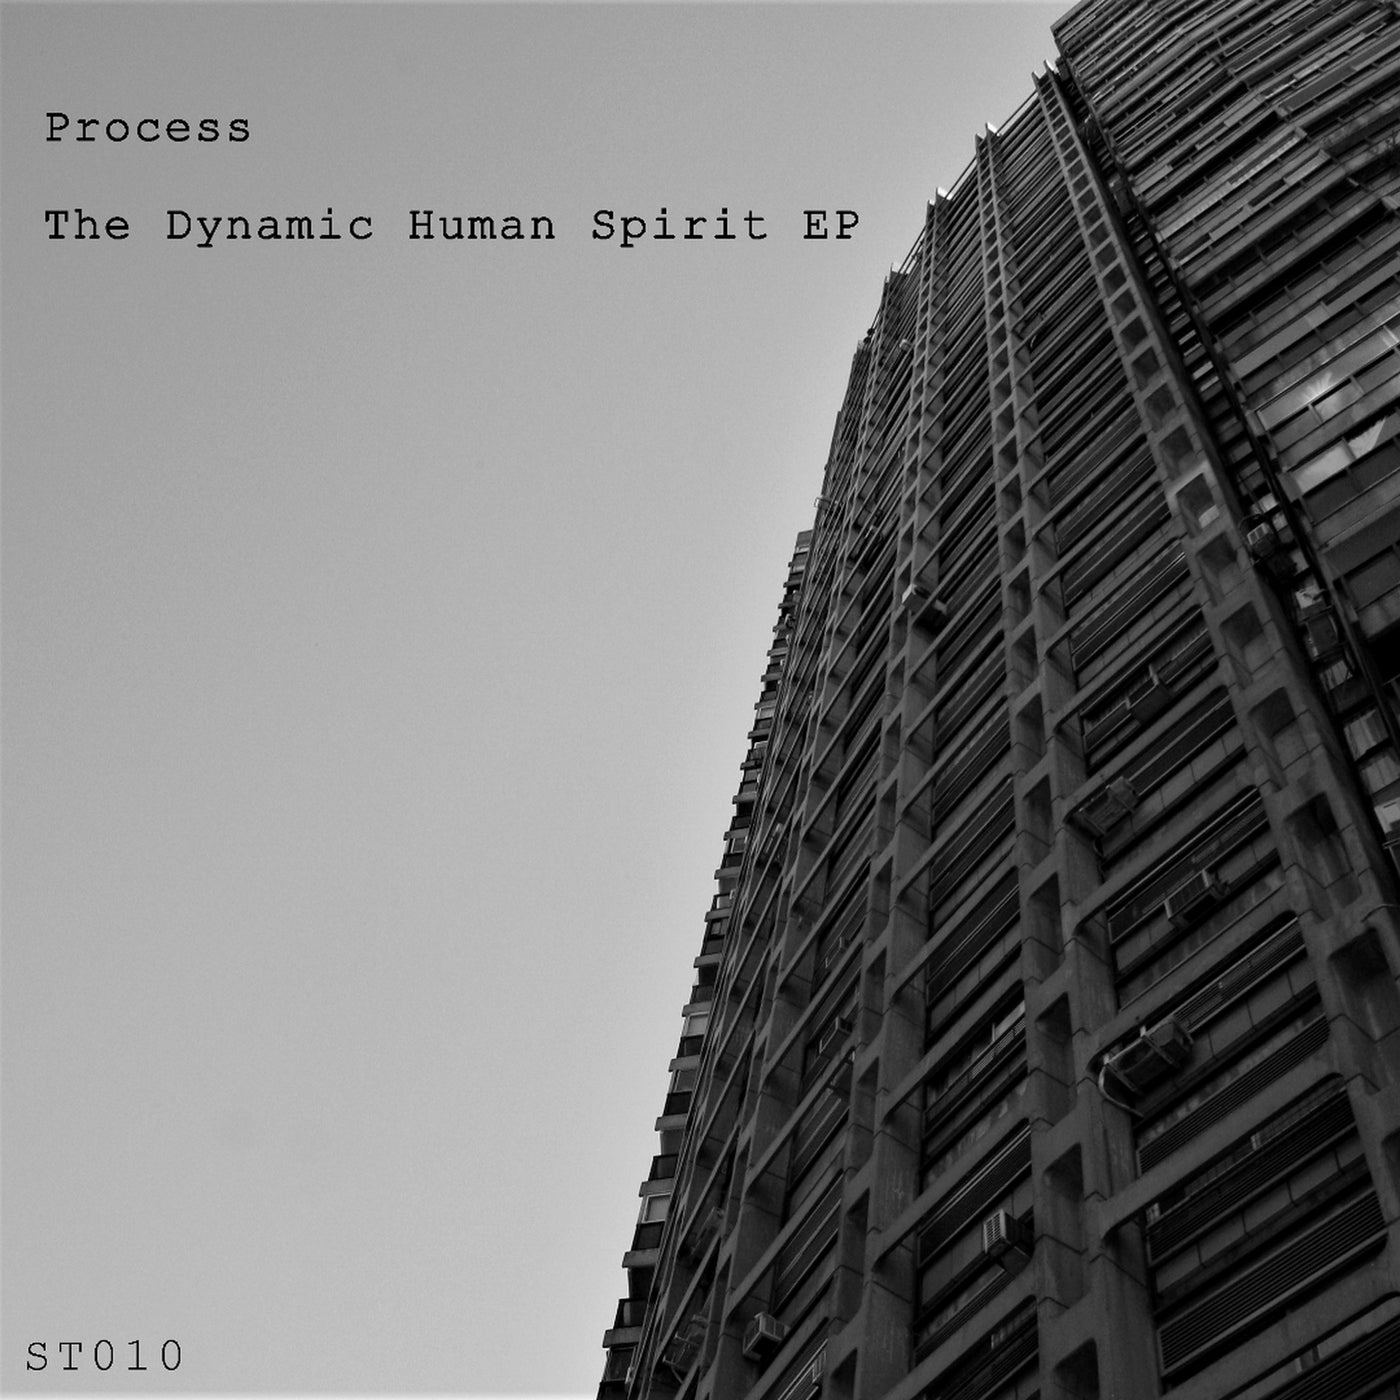 The Dynamic Human Spirit EP